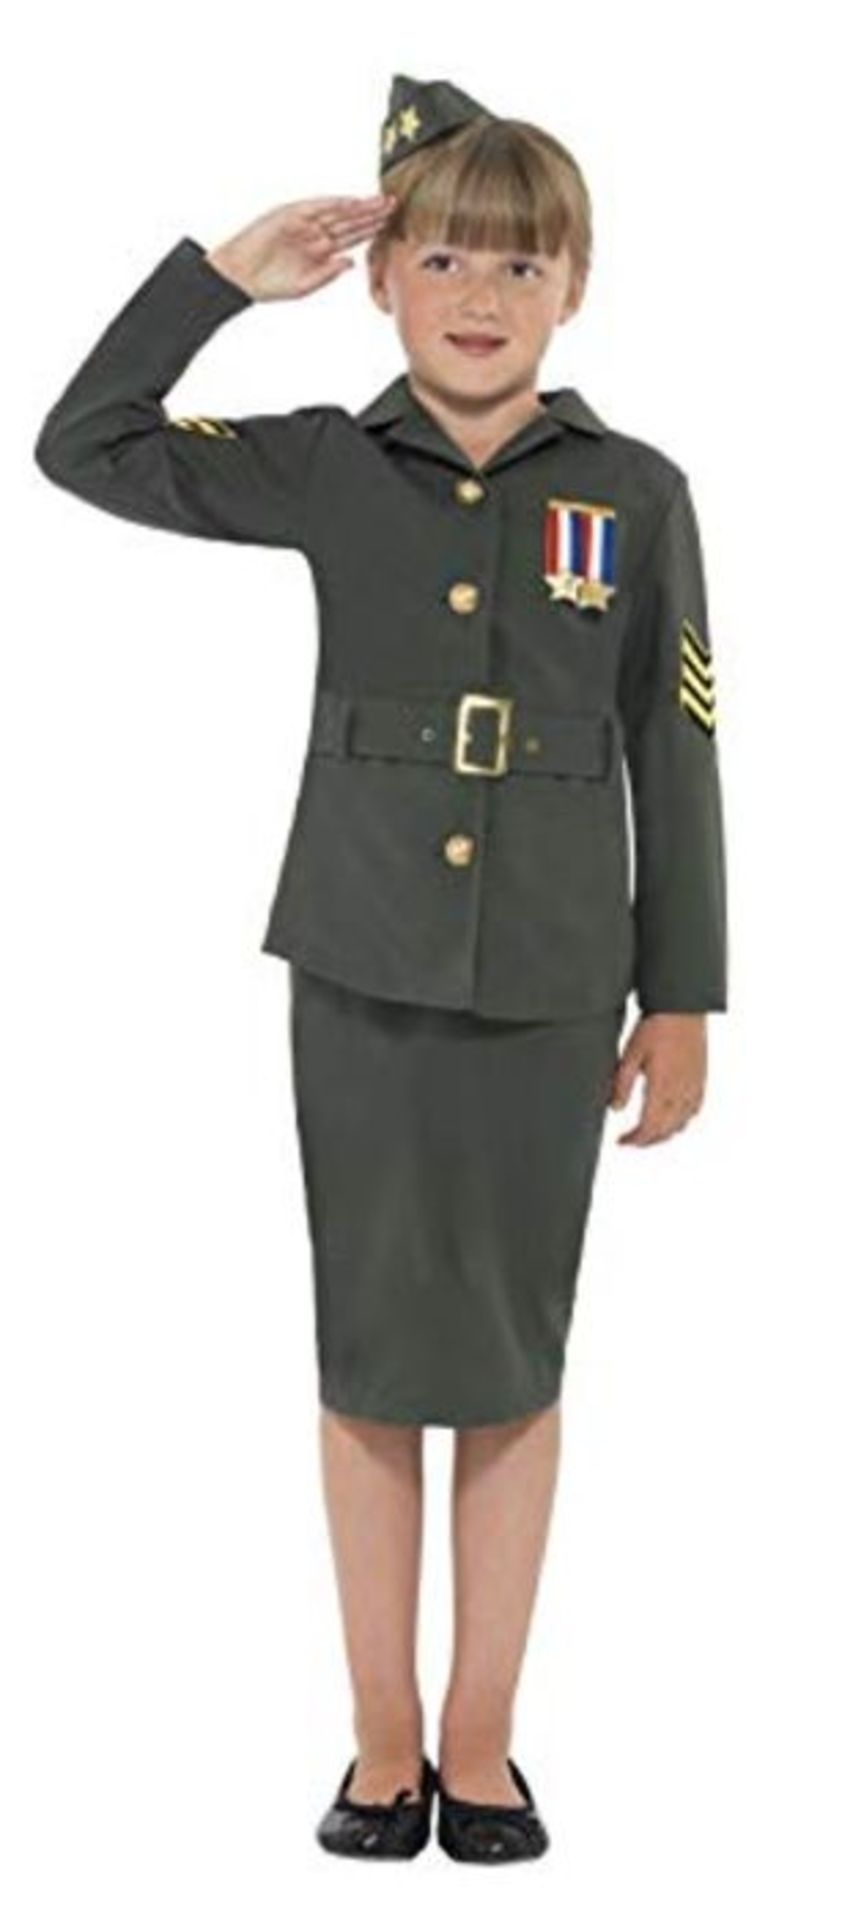 Smiffys WW2 Army Girl Costume